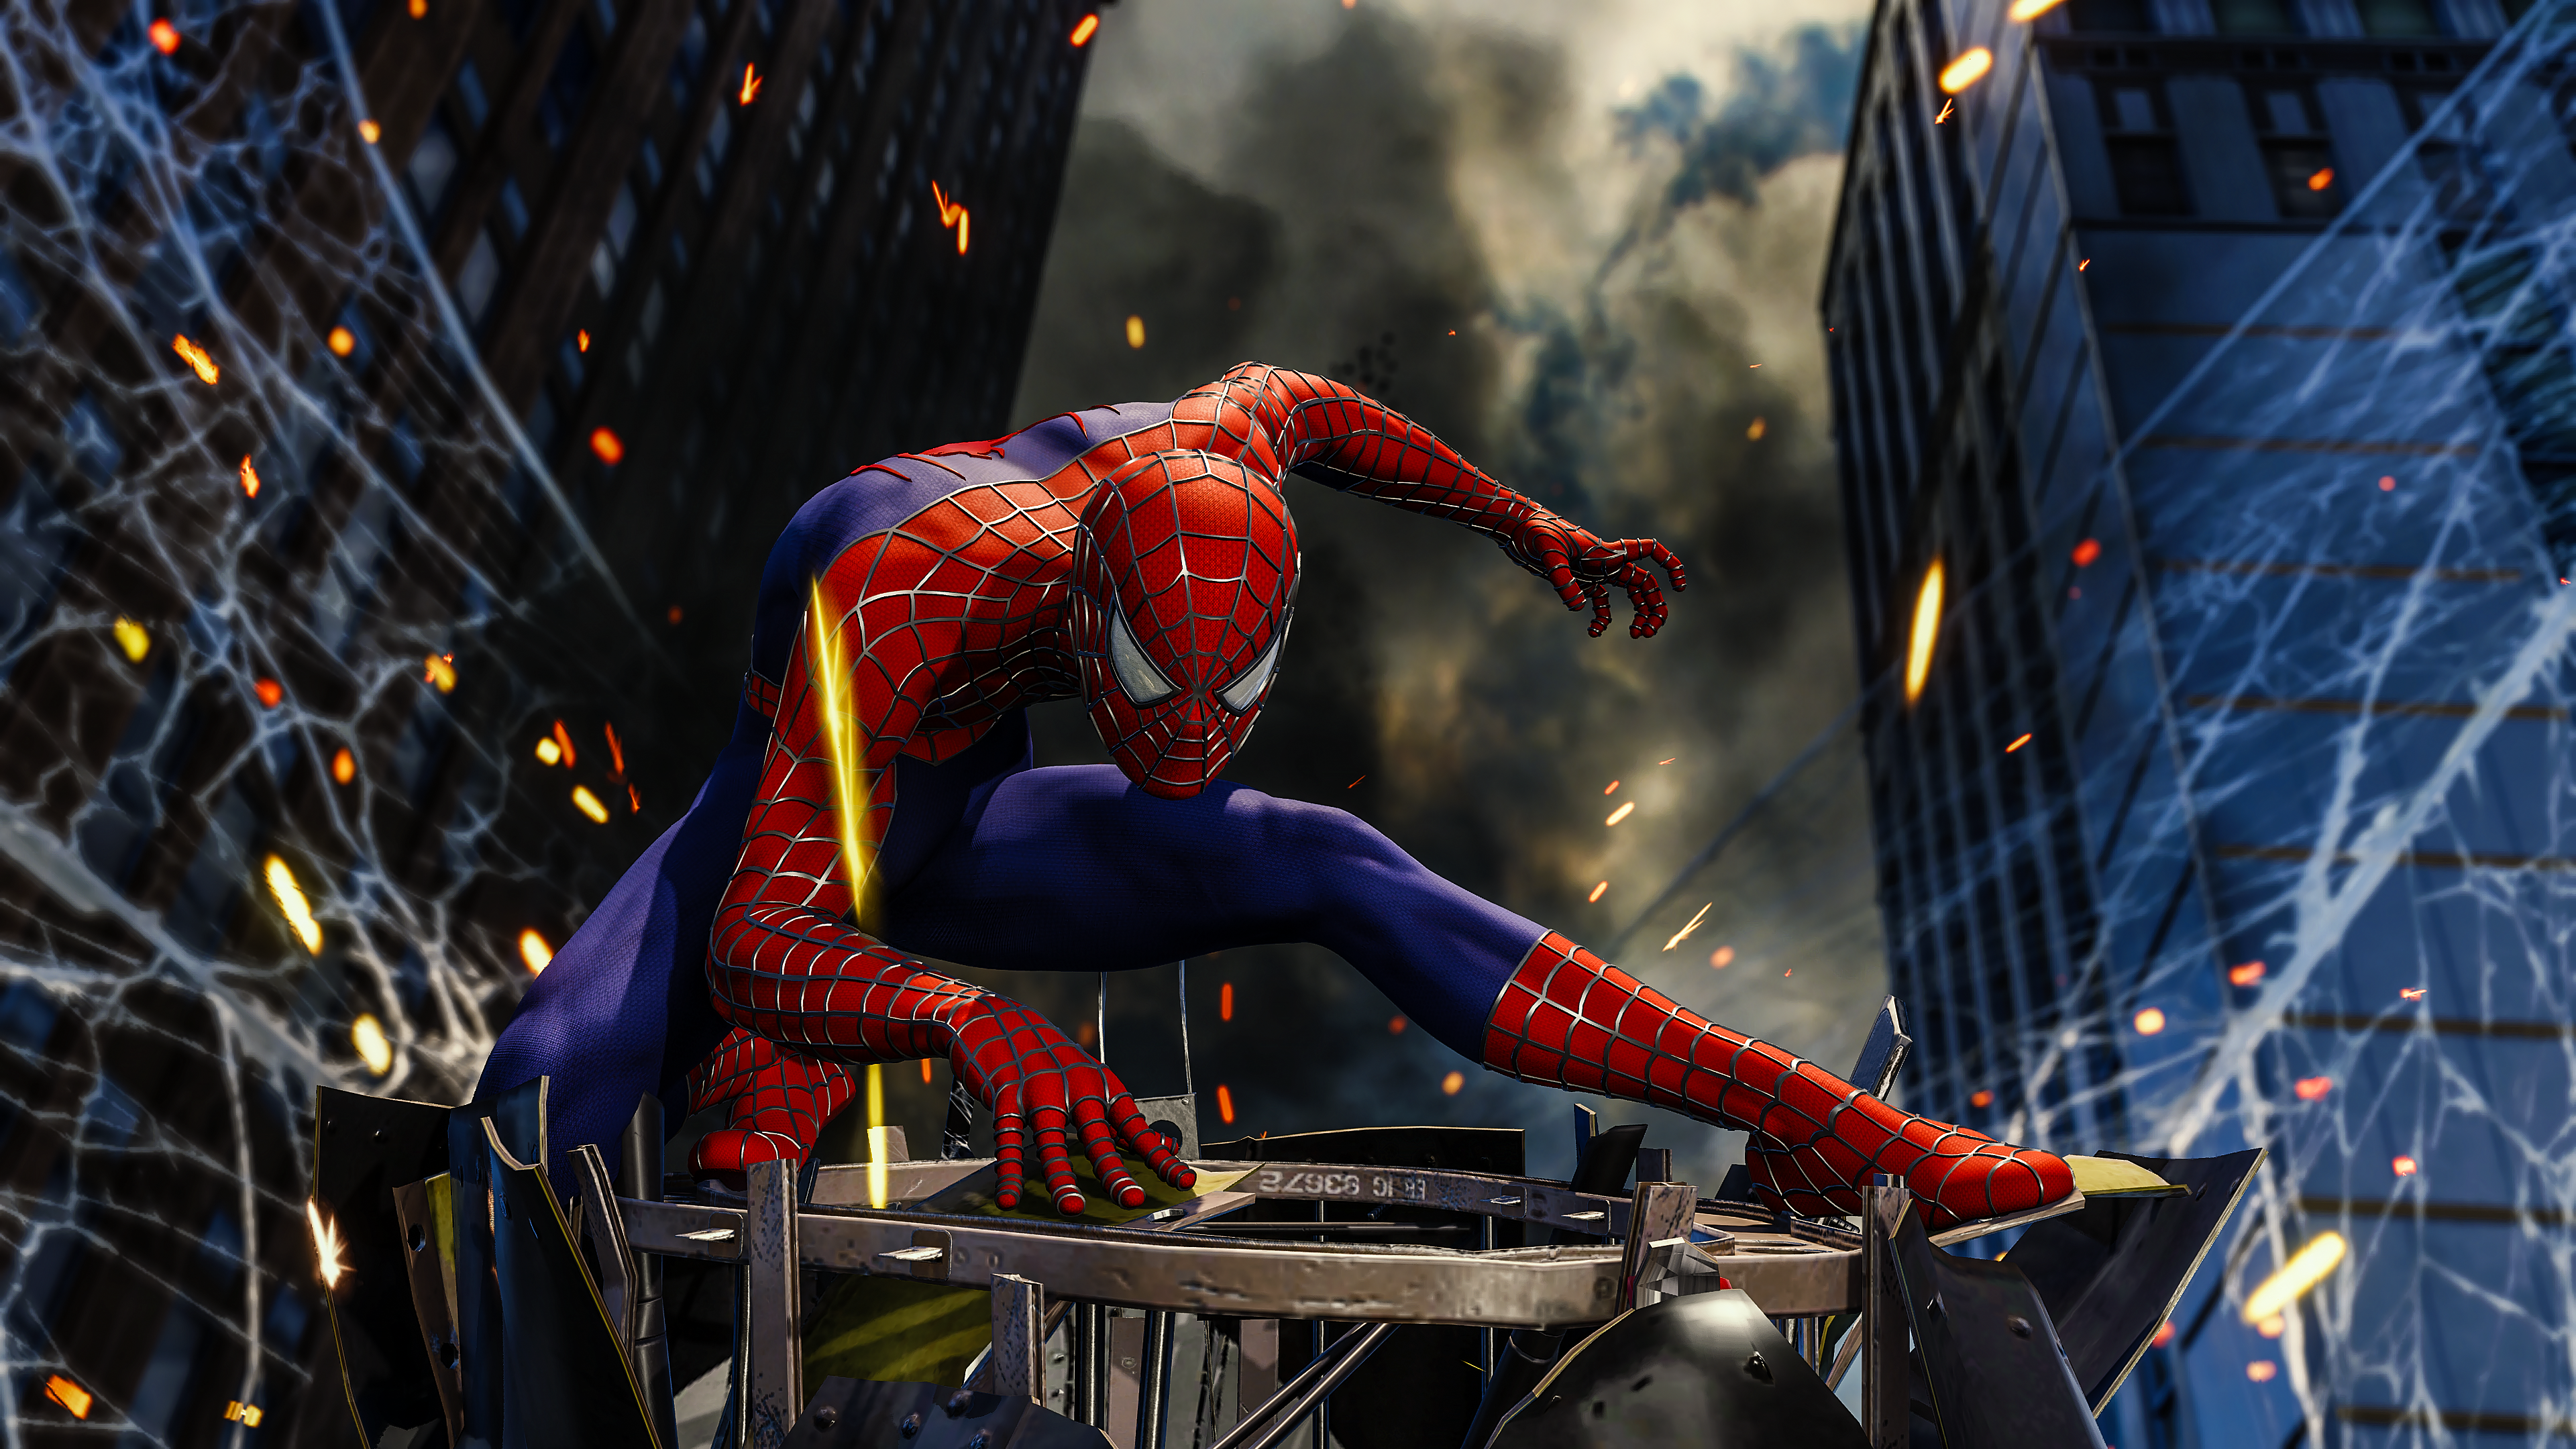 Spider-Man (PS4) 4k Ultra HD Wallpaper by korner